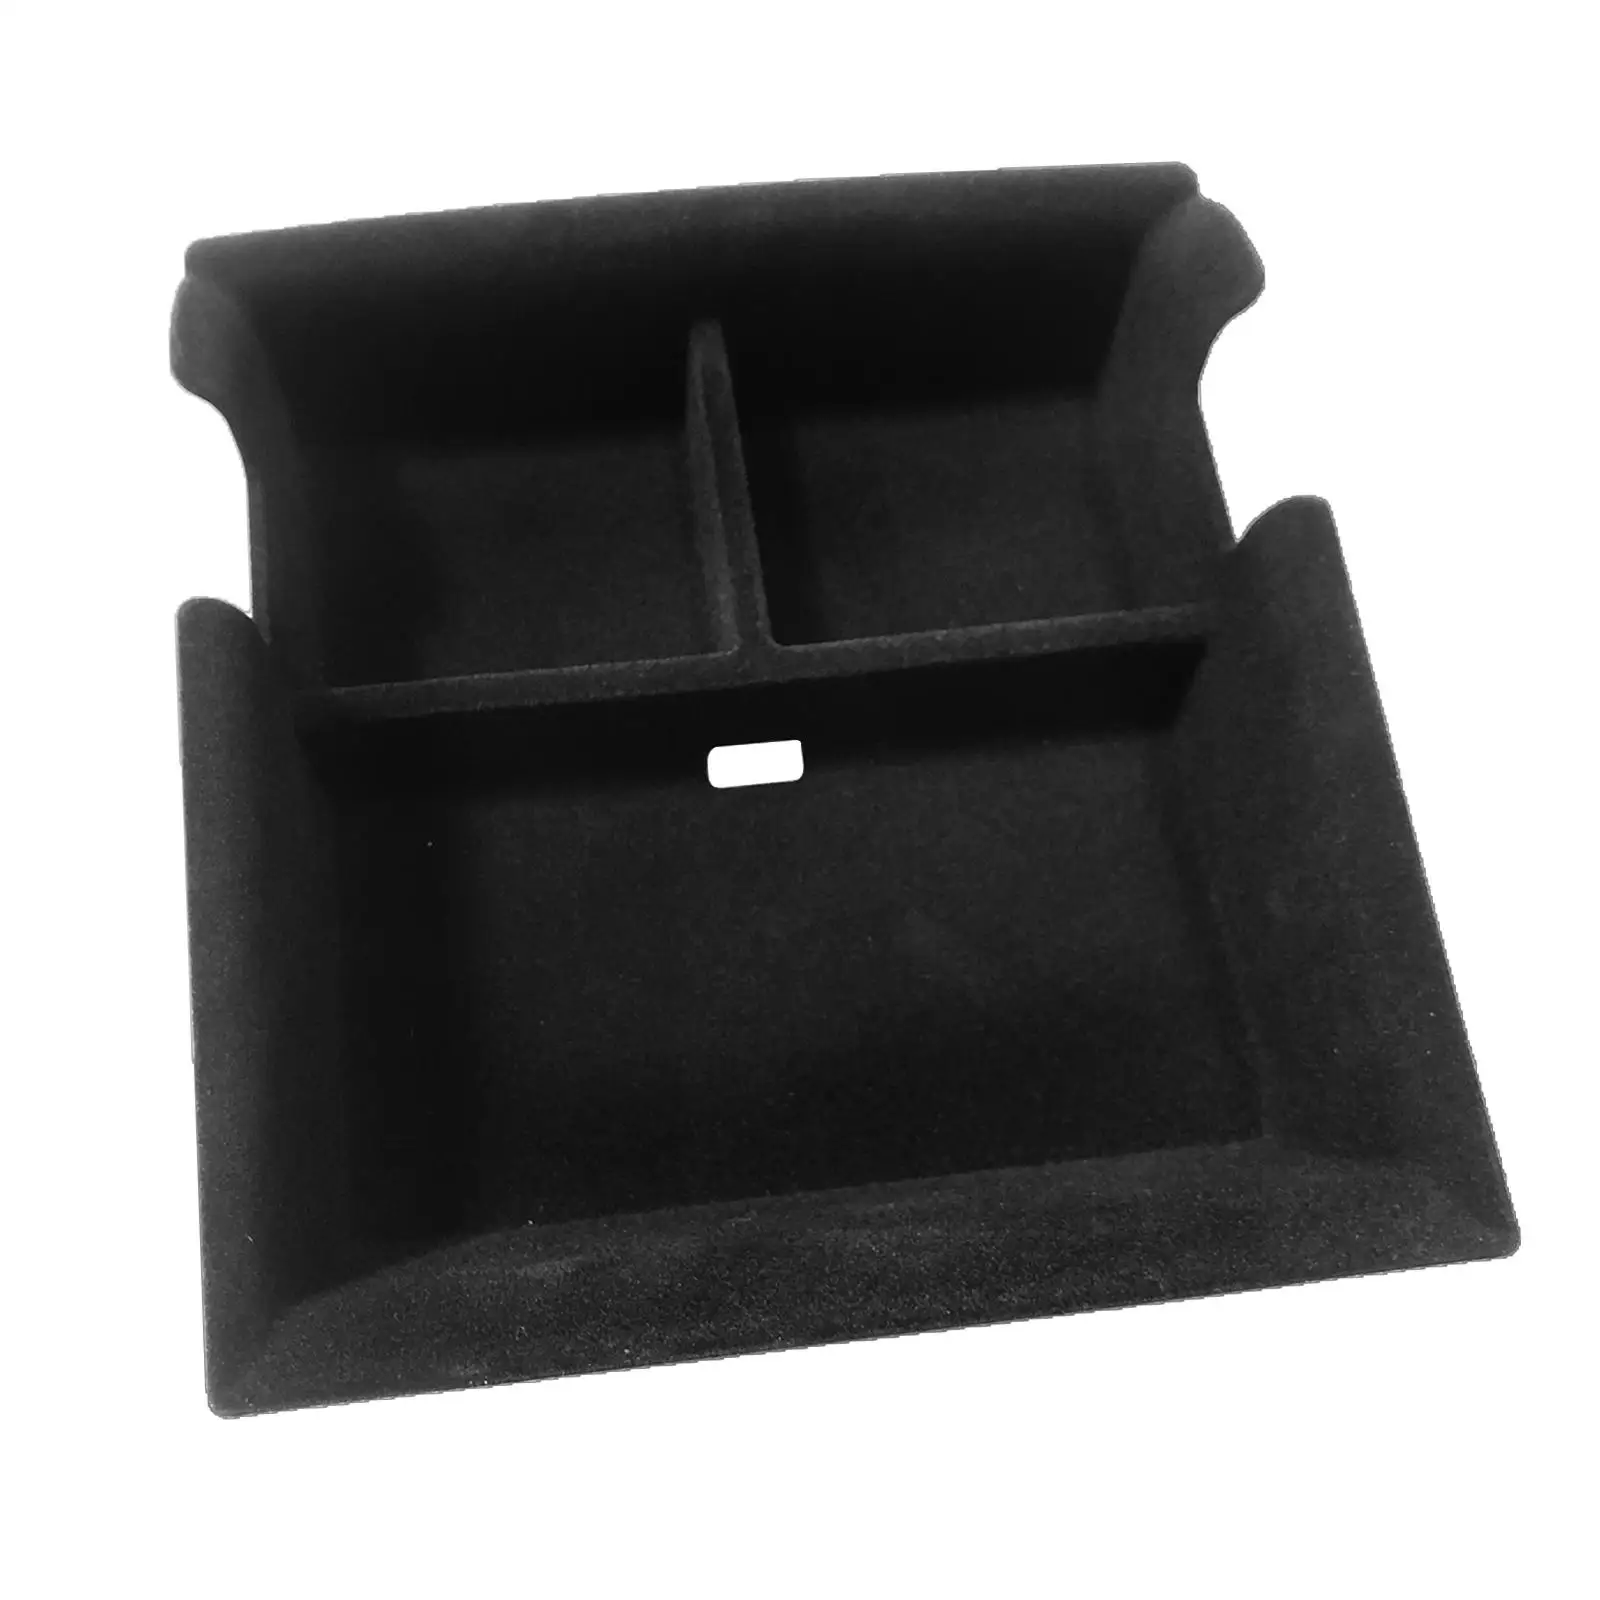 Auto Center Console Organizer Tray Armrest Storage Box/ for Yuan Plus Easy Installation Accessory/